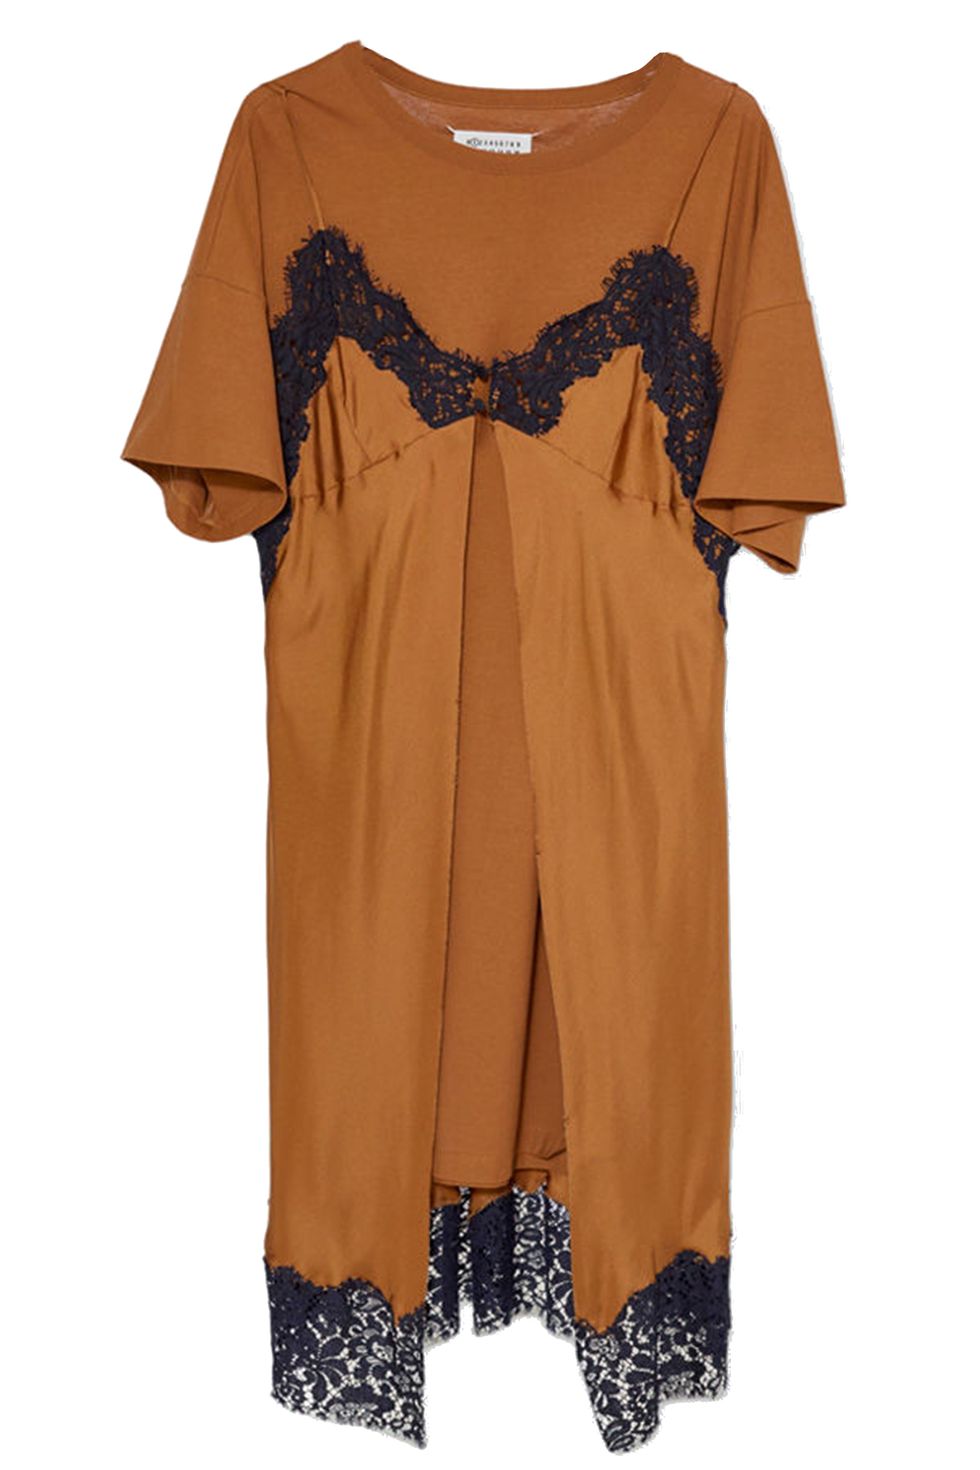 <p>Maison Margiela Pure Silk Twill Dress, $1,795; <a href="http://www.lagarconne.com/store/item/90-24-/39513/Maison-Margiela-Pure-Silk-Twill-Dress.htm#image_tiger_4" target="_blank">lagarconne.com</a></p>